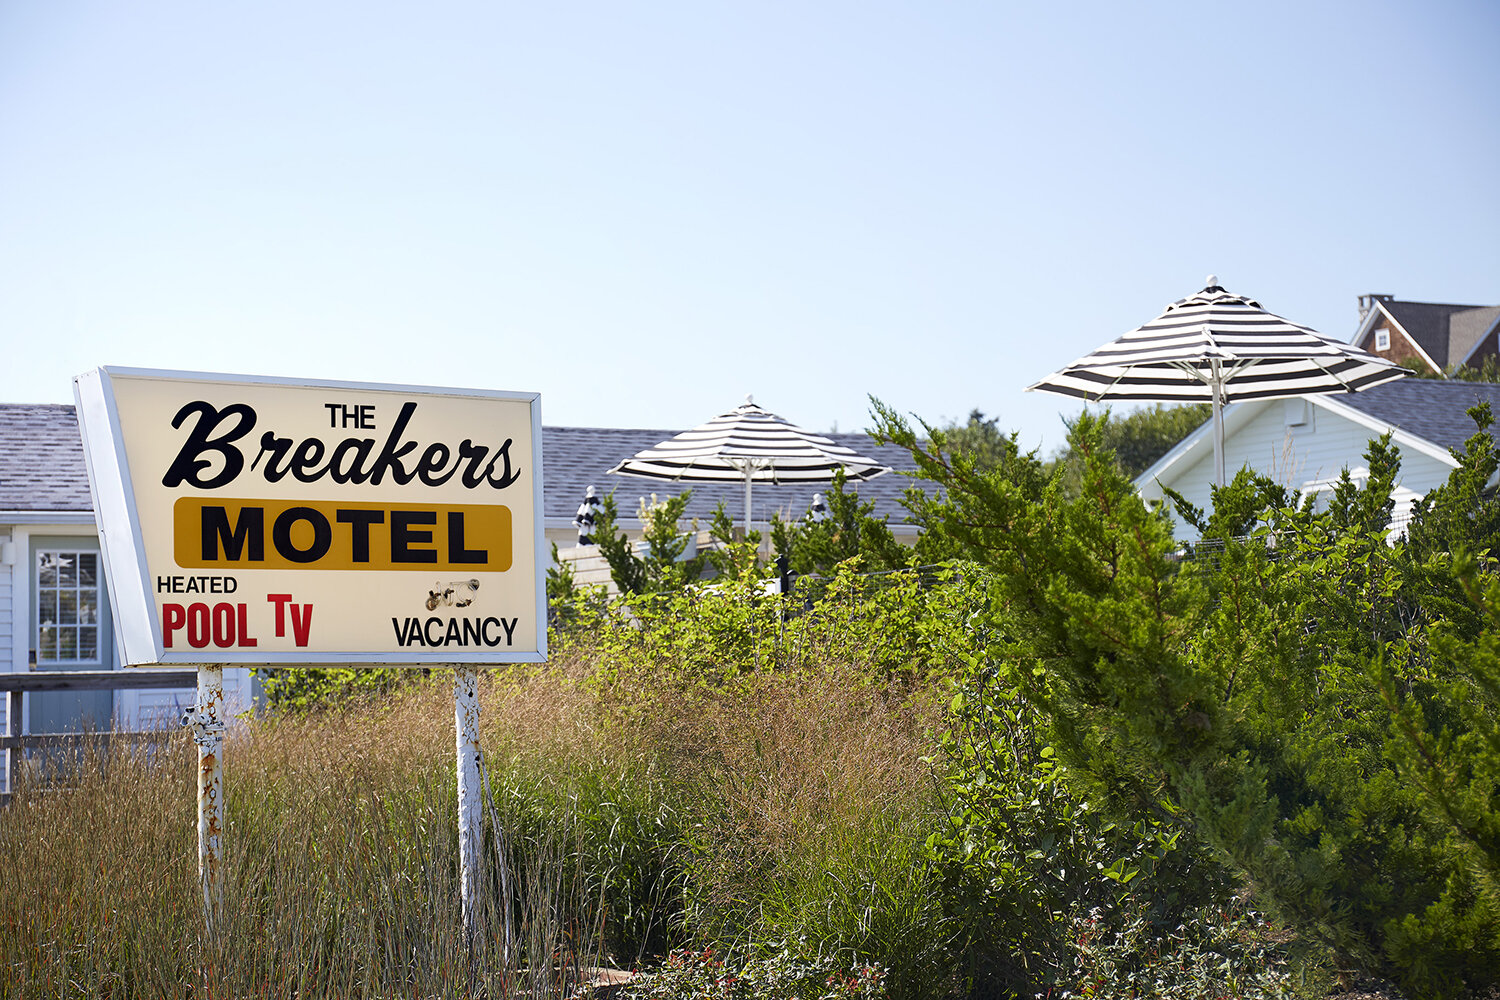 The Breakers Motel, 2017